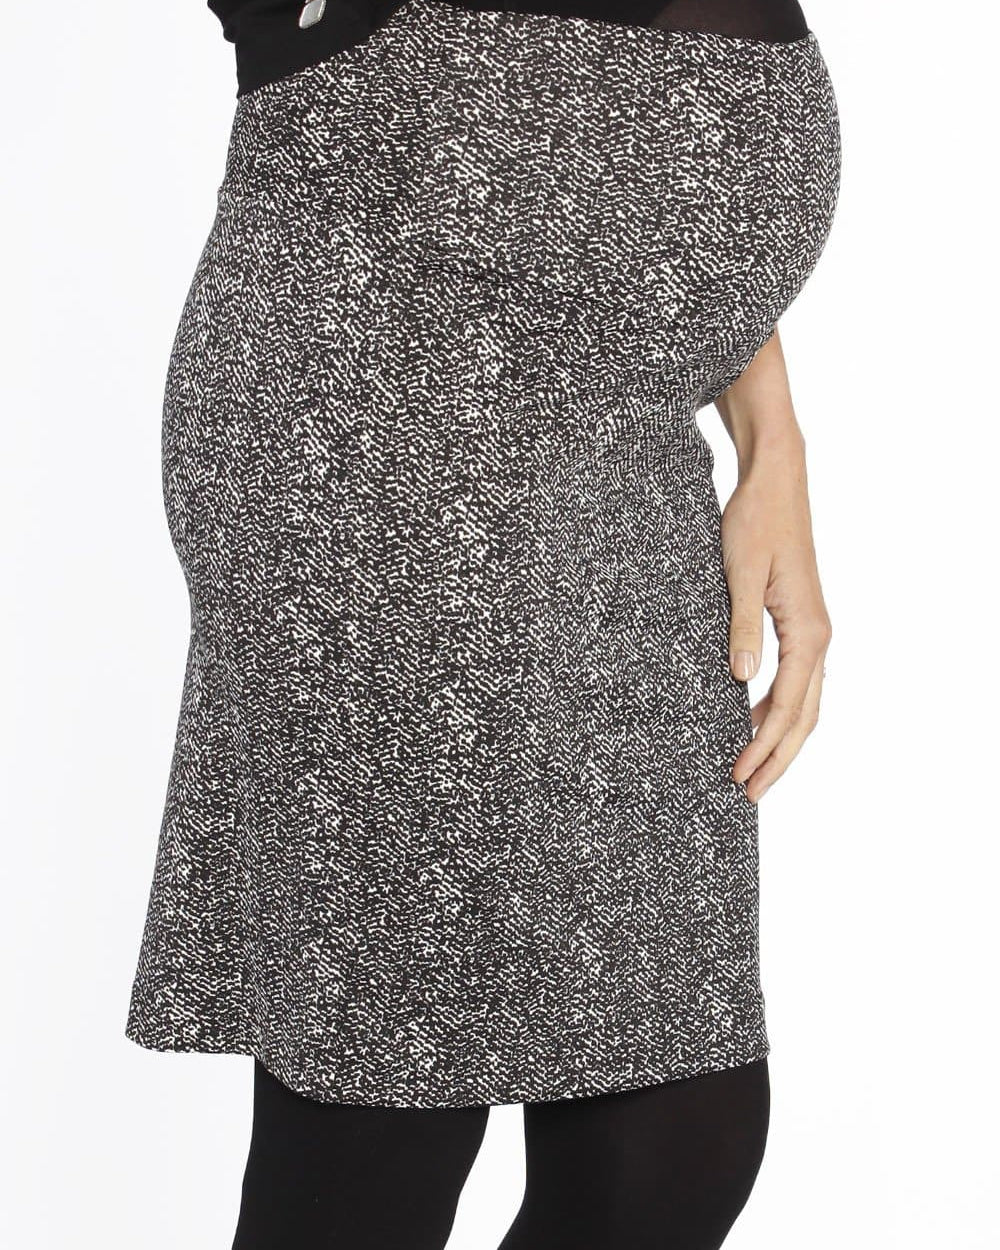 Maternity Stretchy Ponti Skirt in Black & White Print (10590290837)